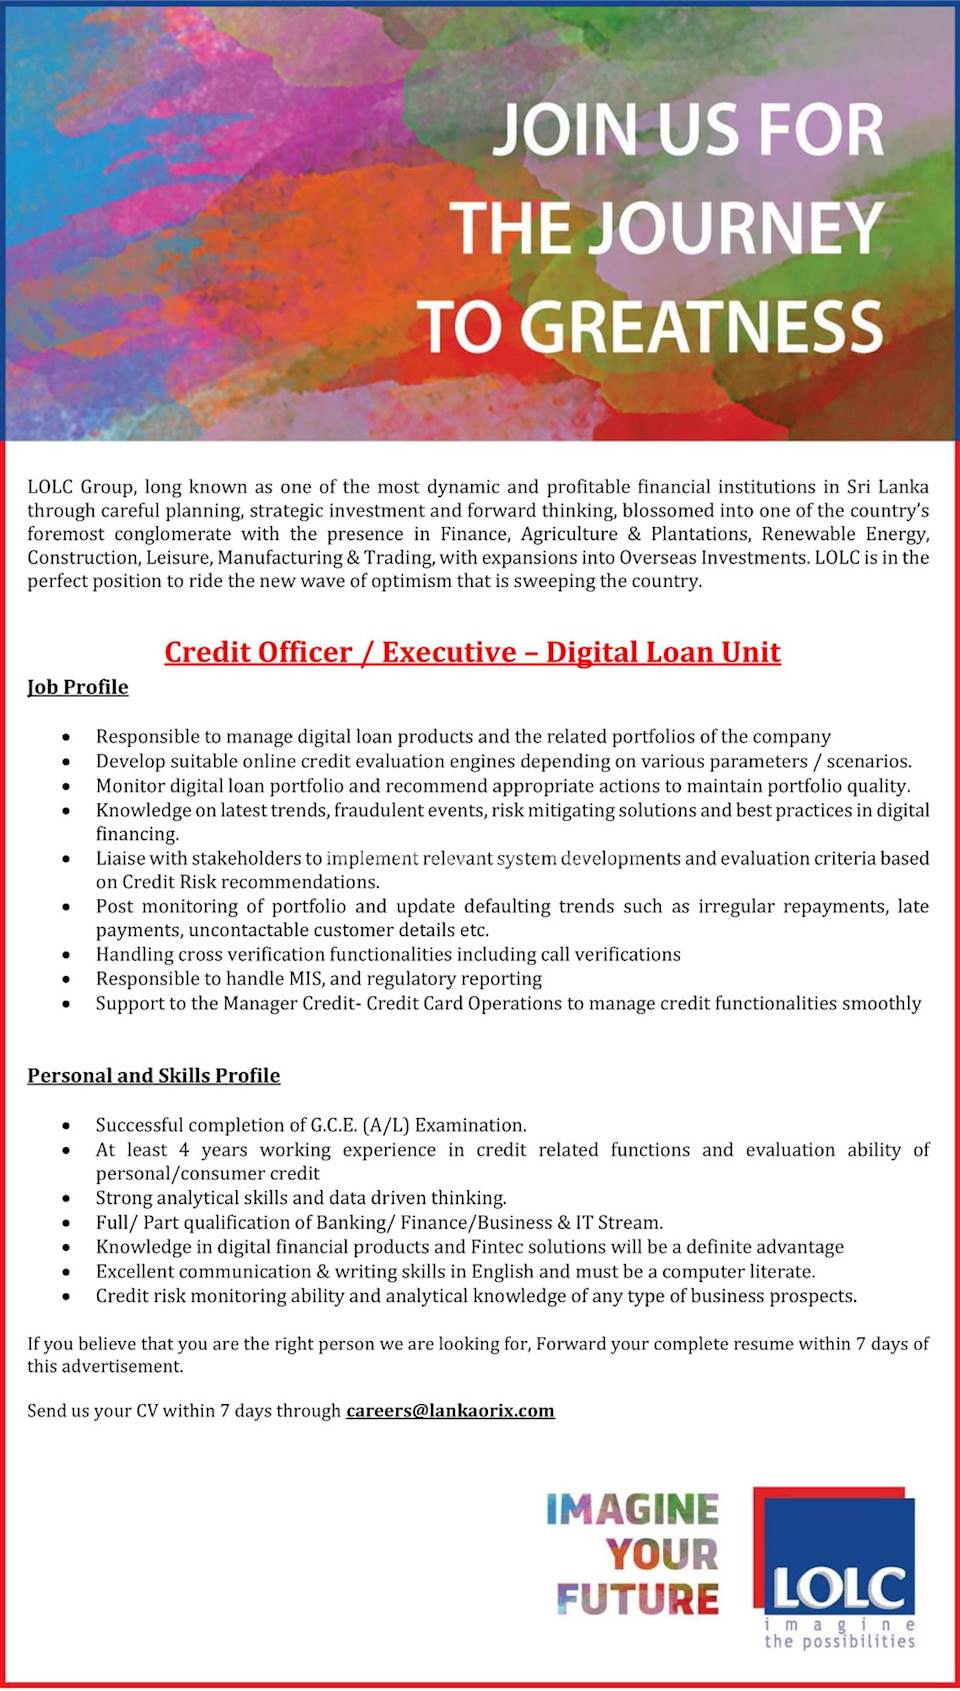 Credit Officer / Executive - Digital Loan Unit